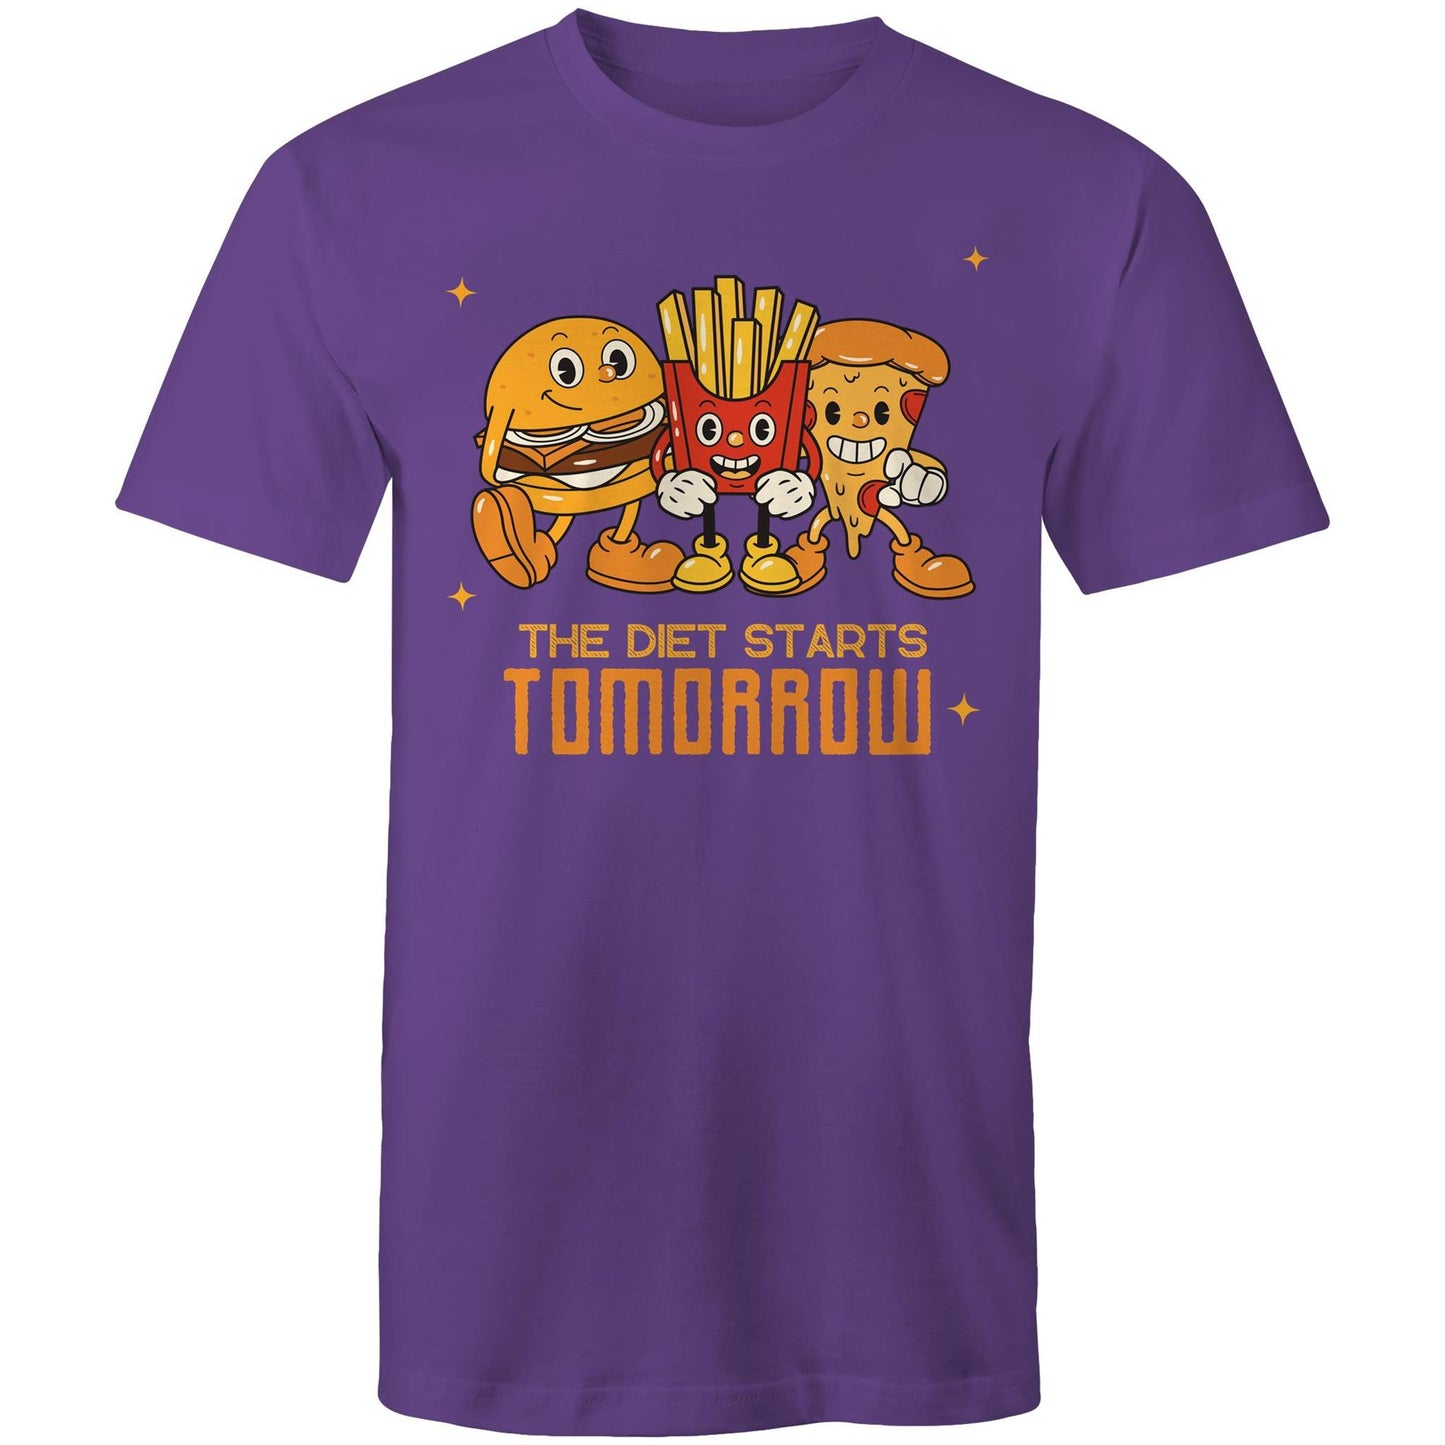 The Diet Starts Tomorrow, Hamburger, Pizza, Fries - Mens T-Shirt Purple Mens T-shirt Food Funny Retro